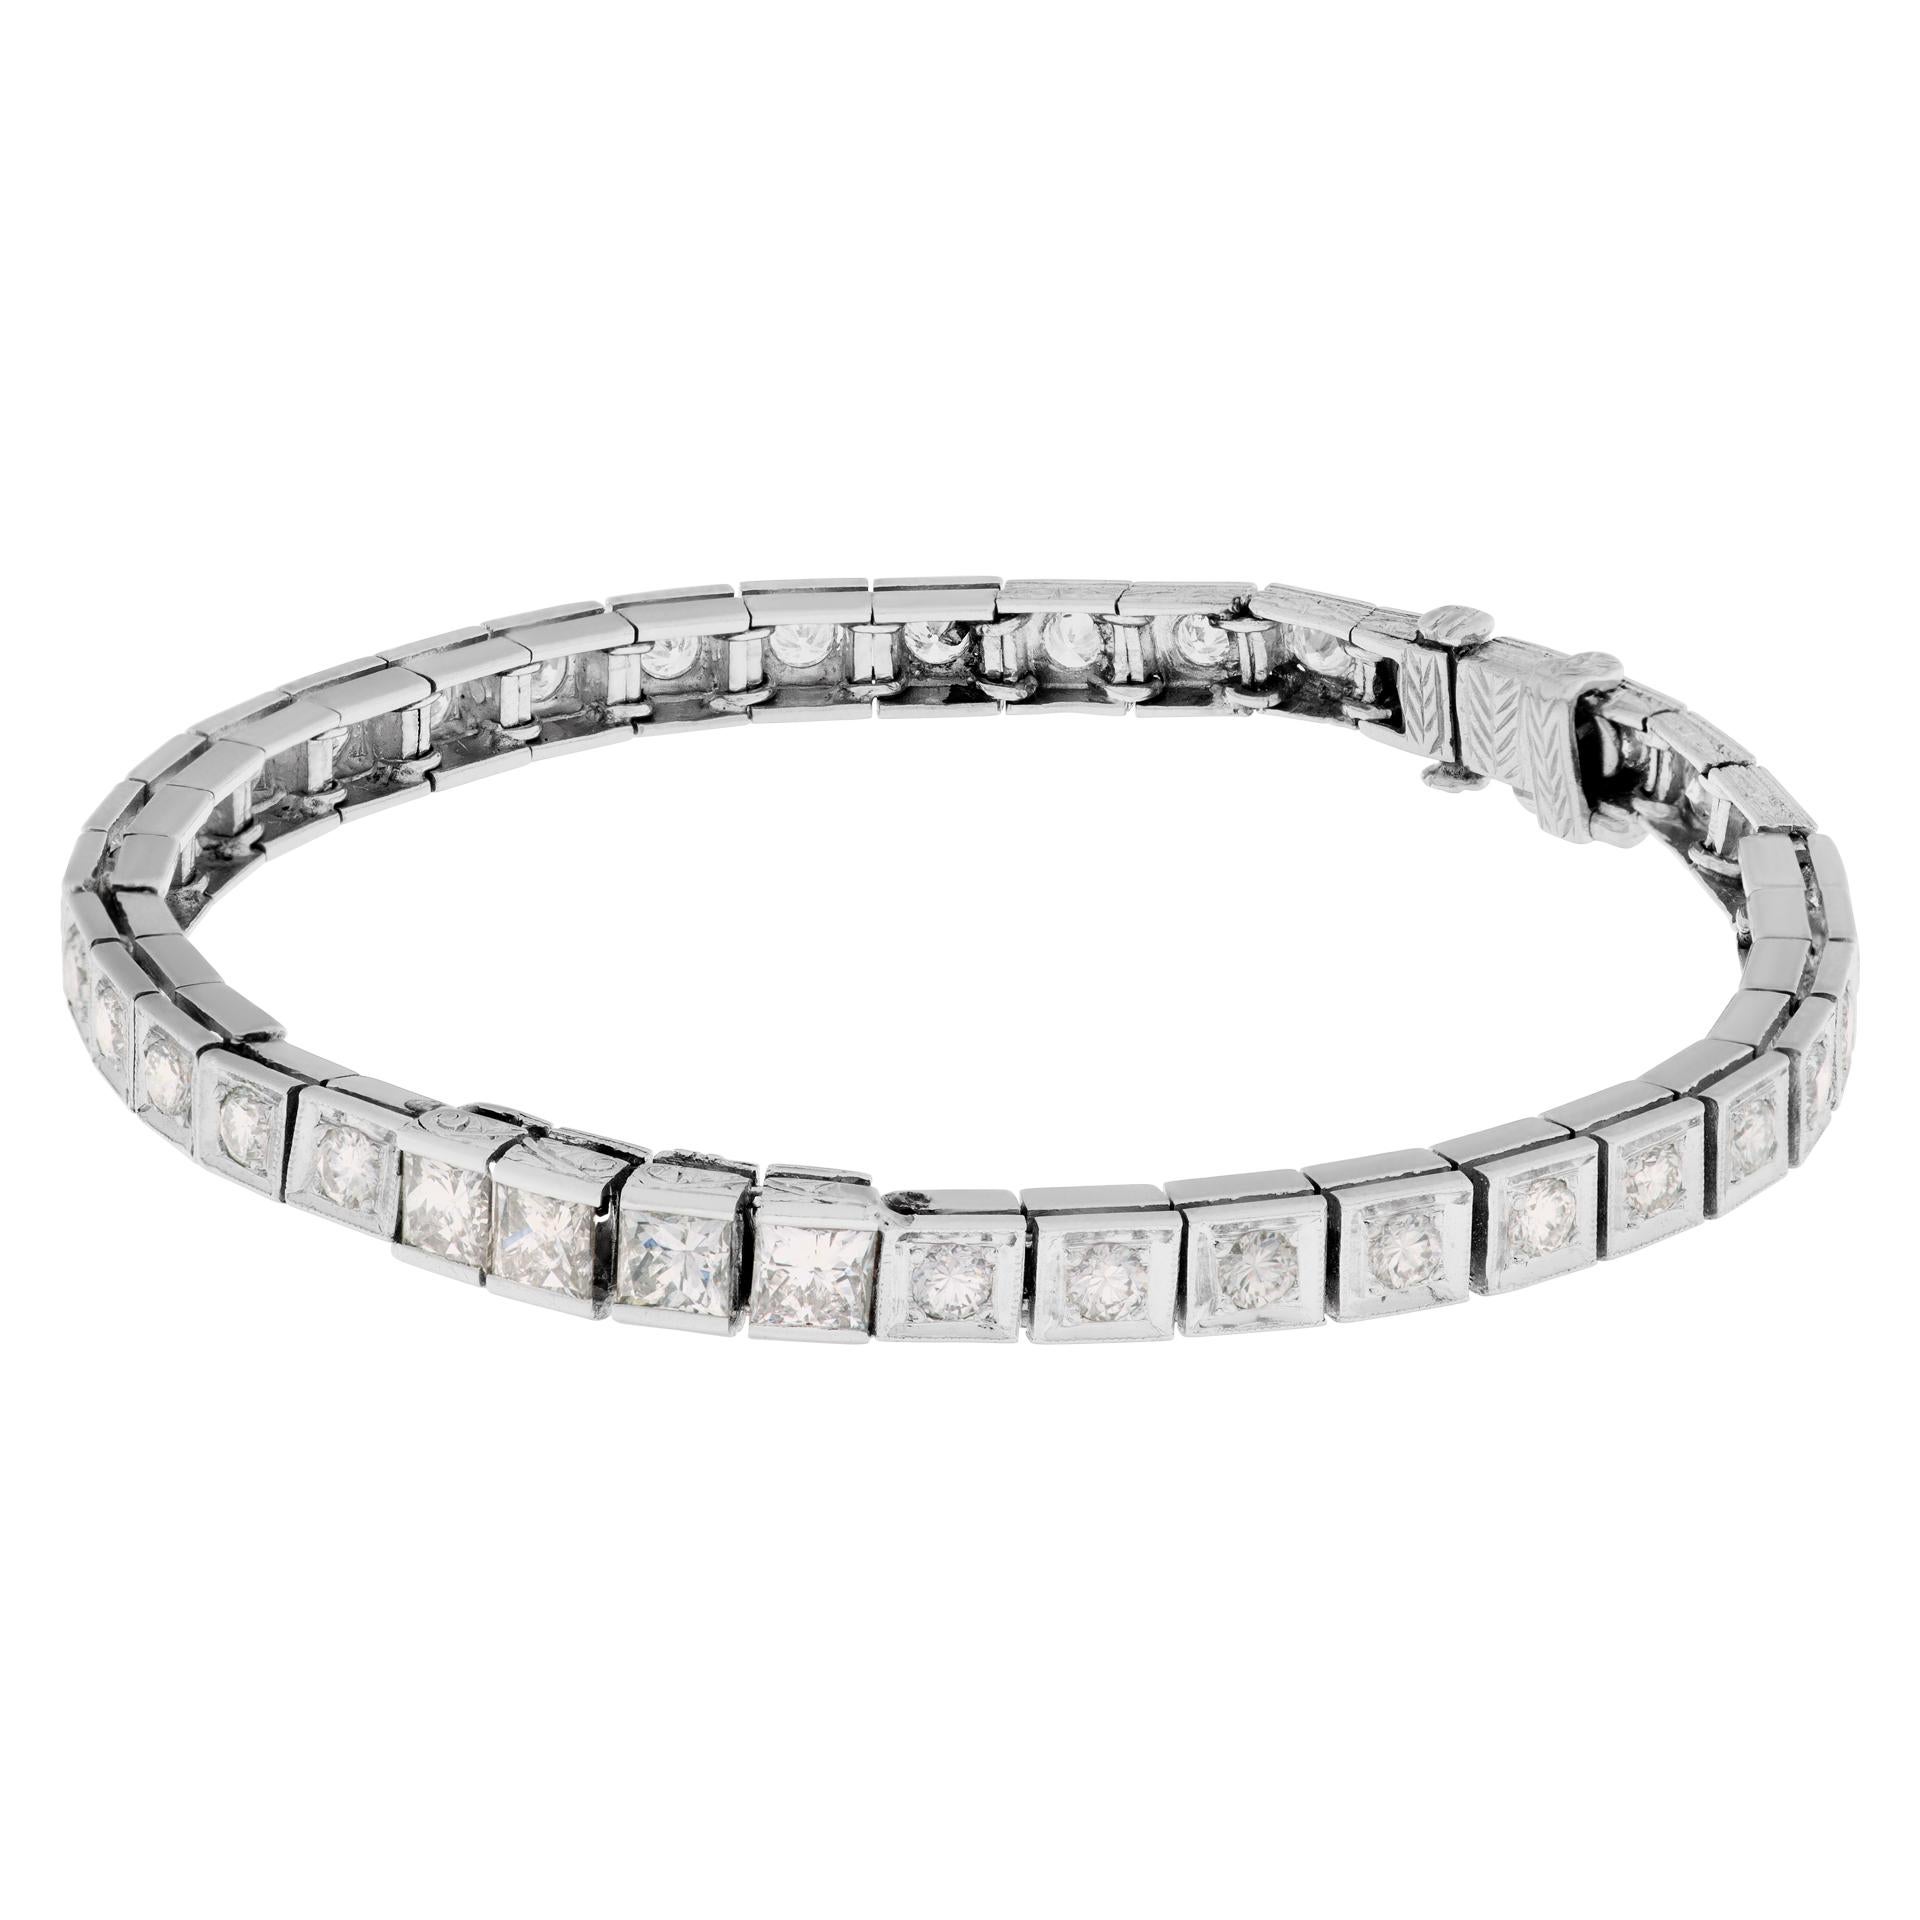 Diamond line bracelet with approximately 2.5 carats in diamonds set in platinum. 6.25